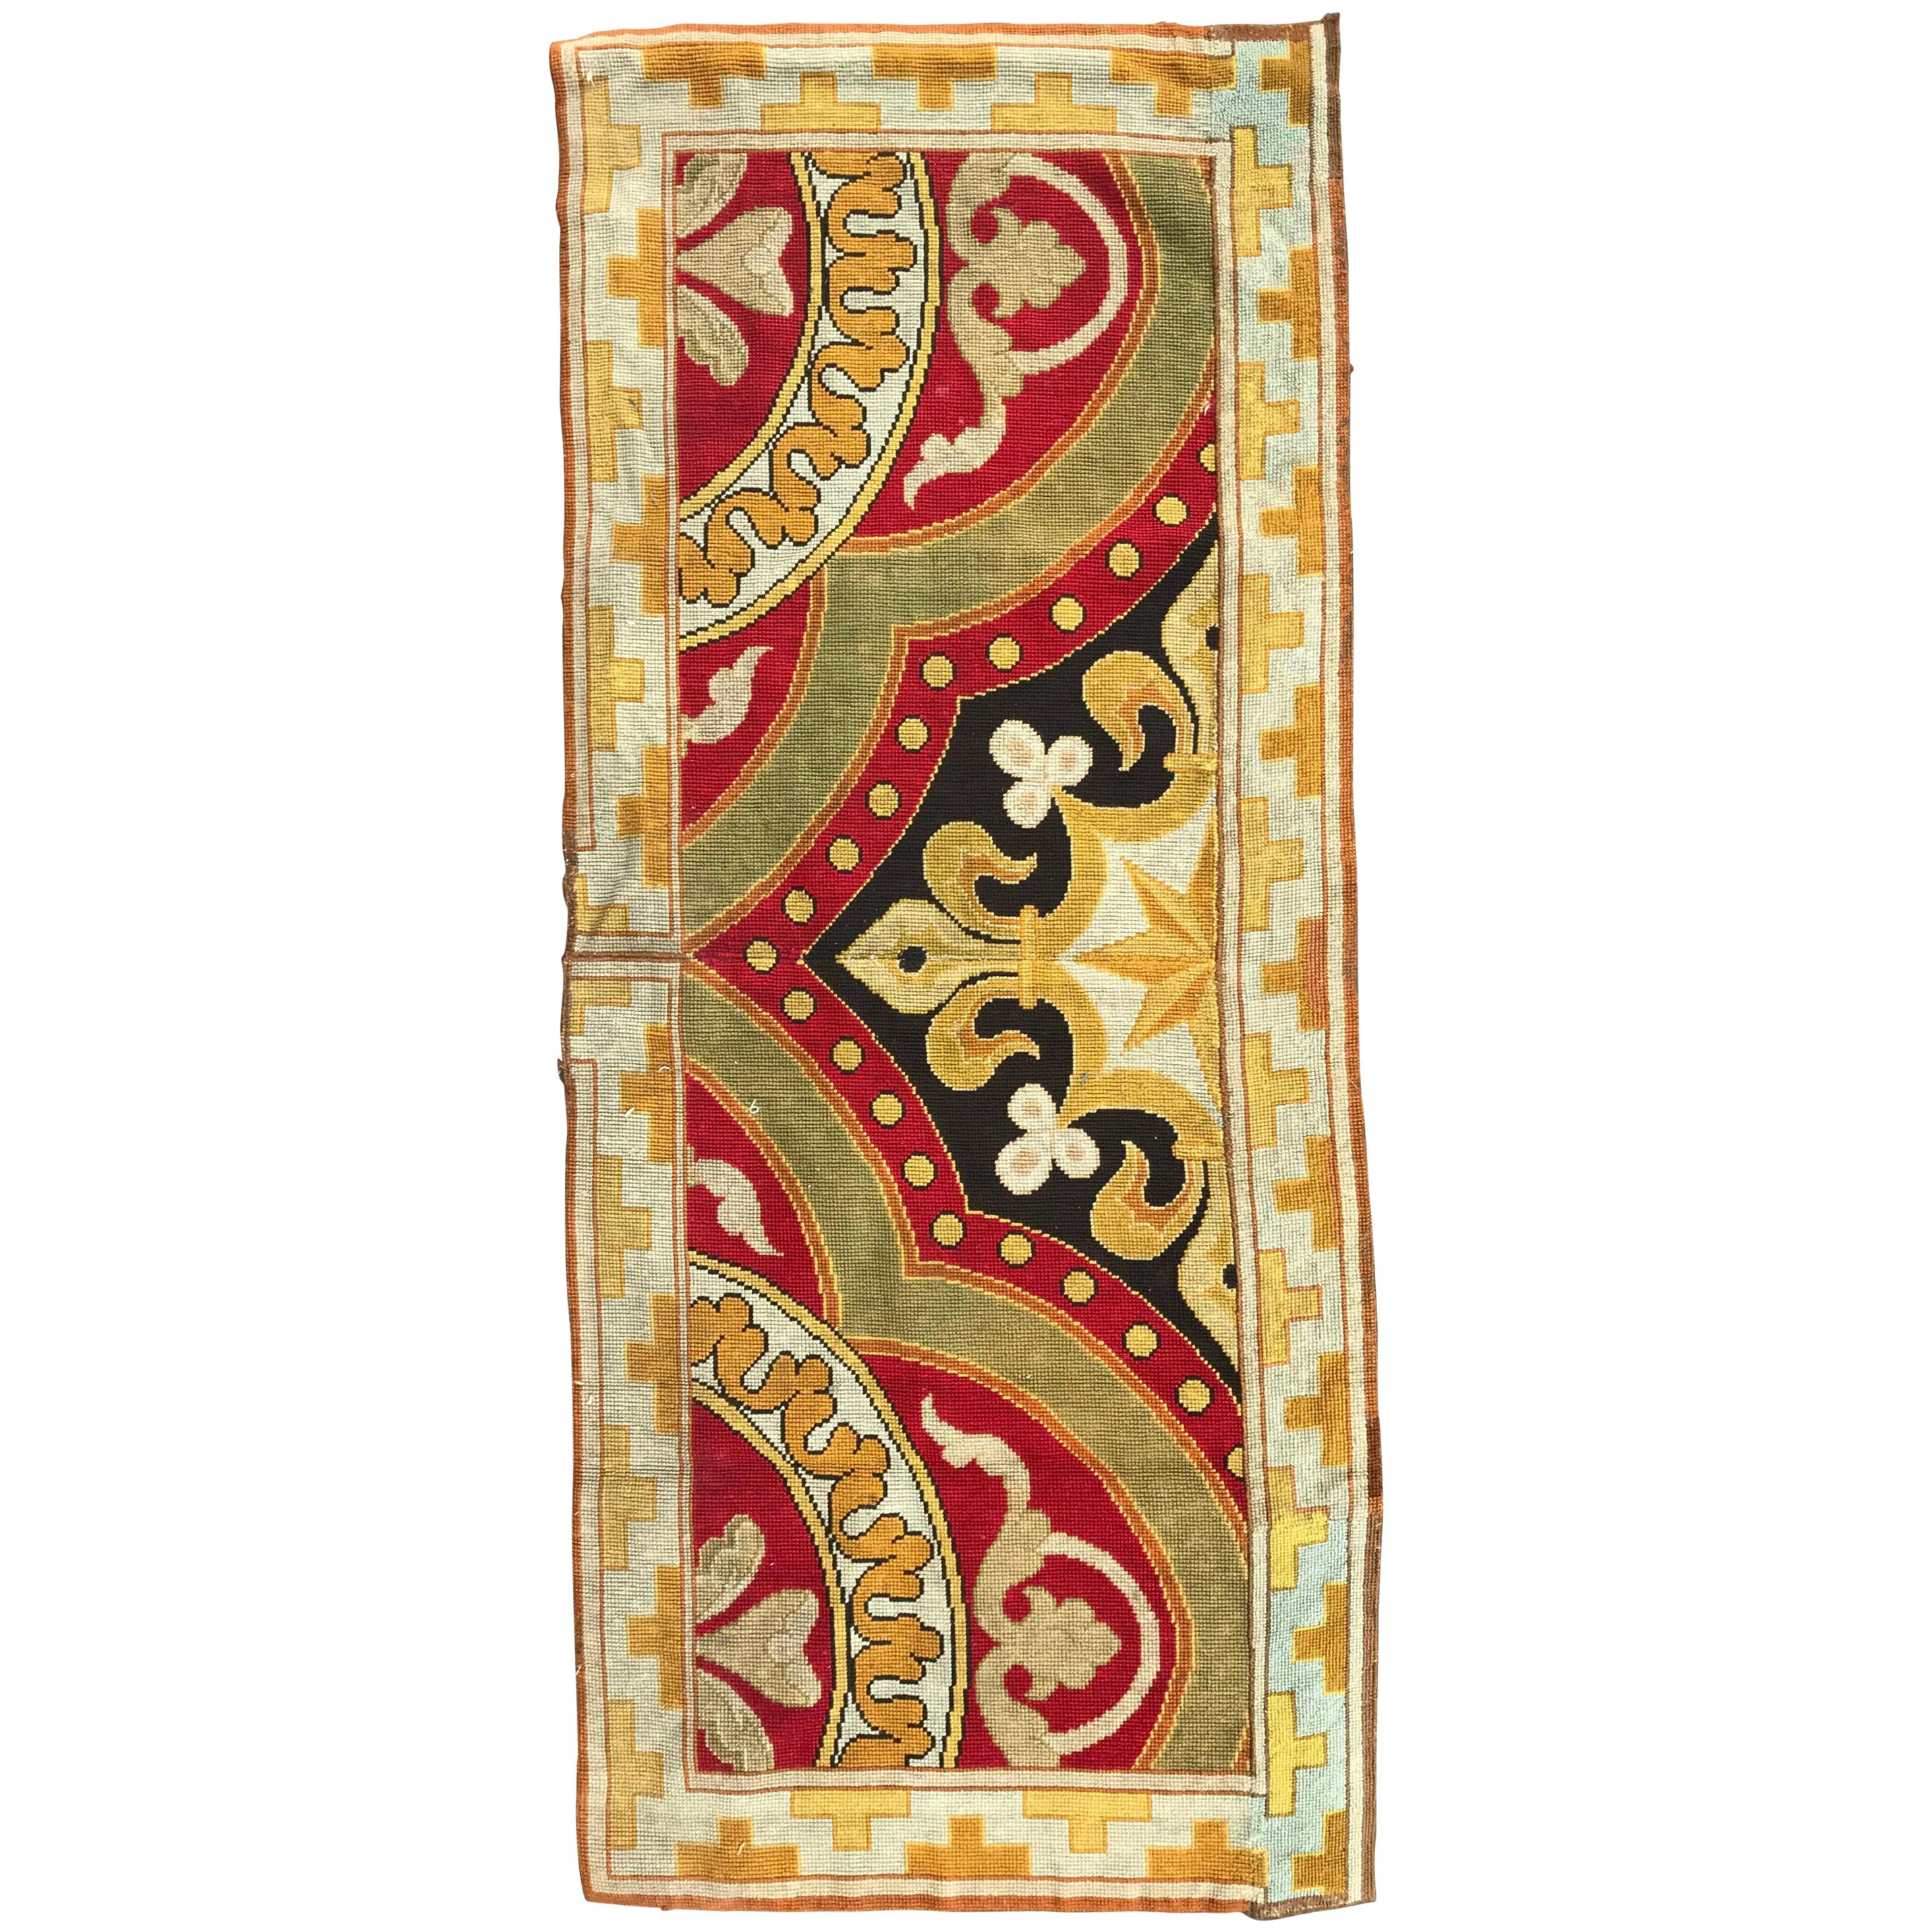 Bobyrug's Beautiful Antique Aubusson Style Needlepoint French Tapestry (Tapisserie française à l'aiguille de style Aubusson)